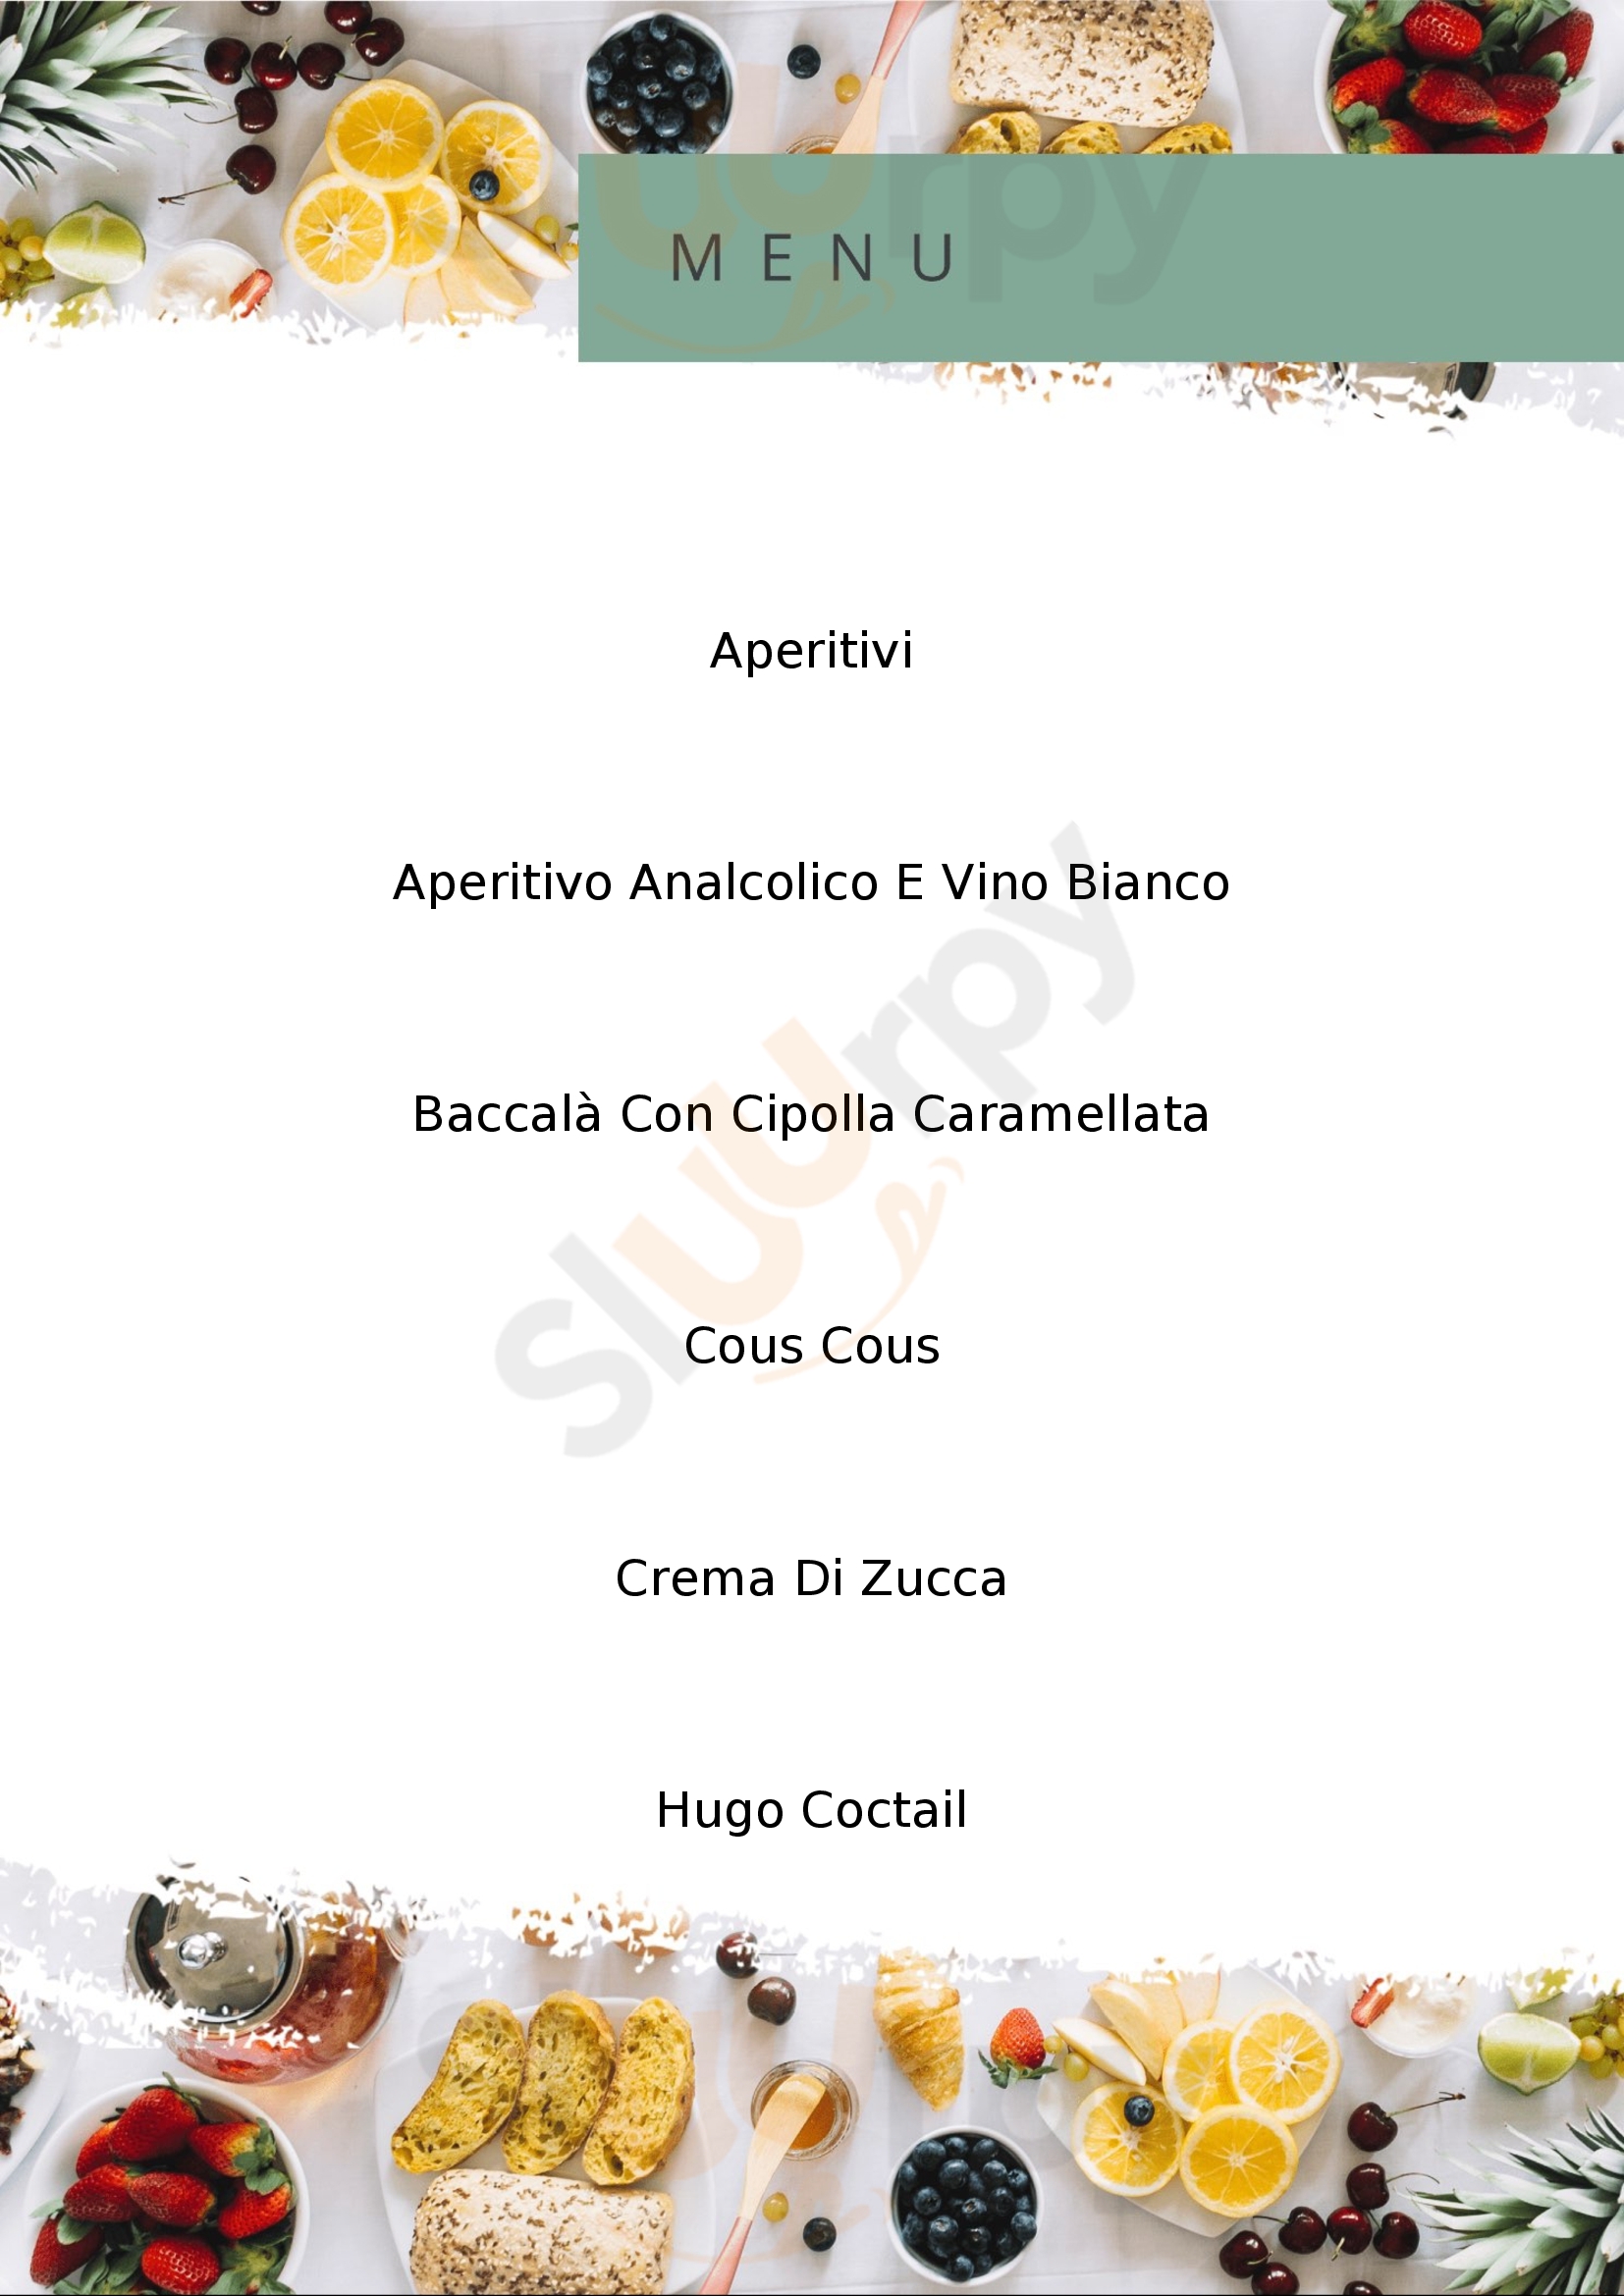 L'OmbraLonga Vineria Cicchetteria Roma menù 1 pagina